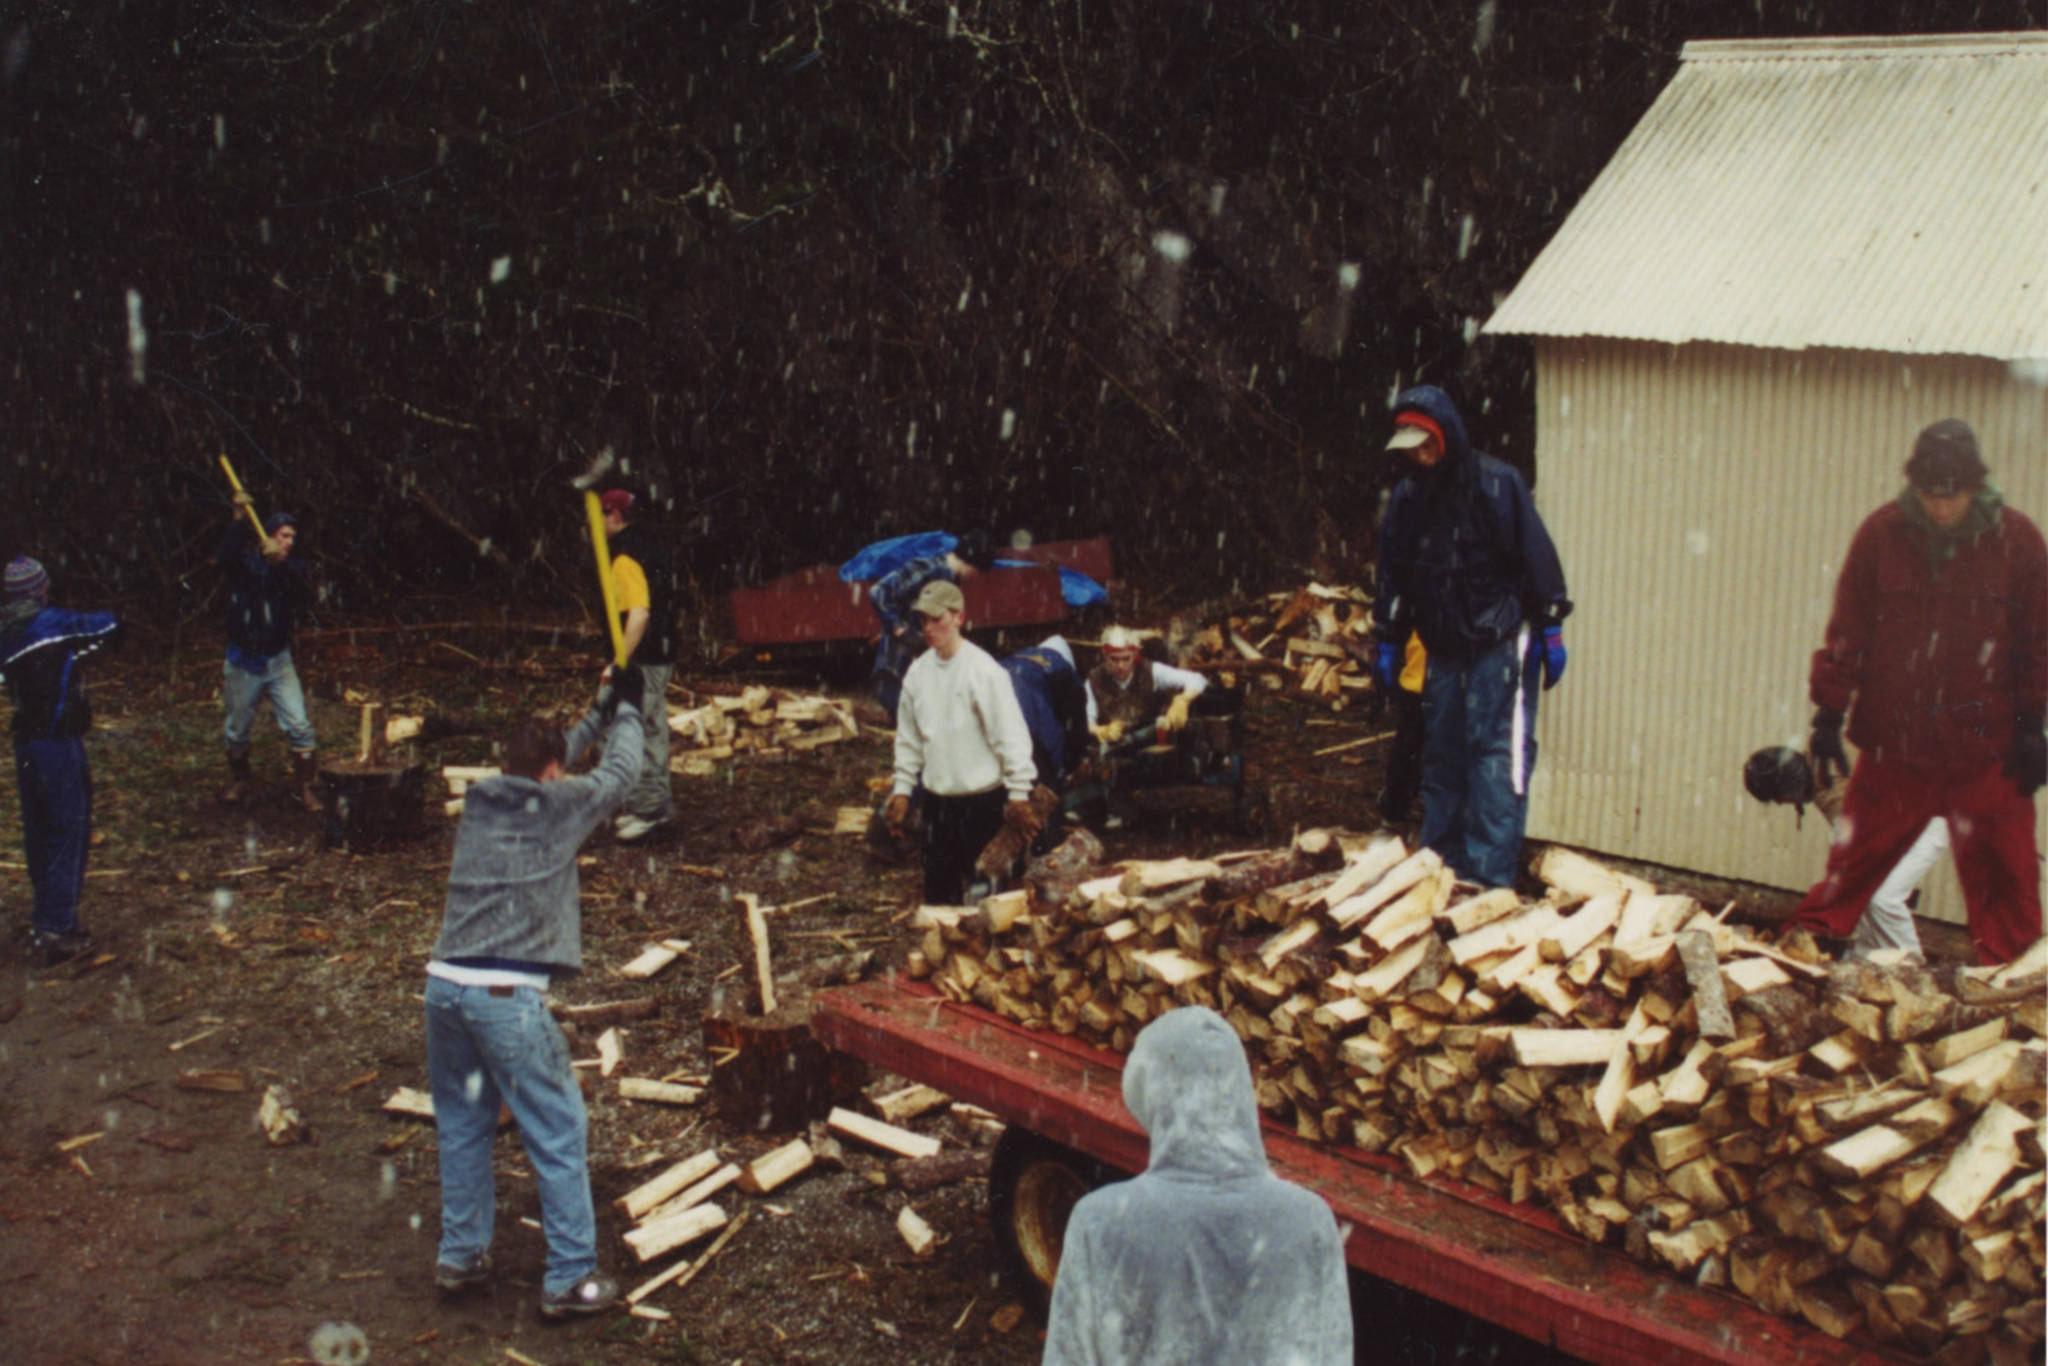 The Juneau-Douglas High School boys soccer team cuts firewood for a team fundraiser Out The Road in 2000. (Courtesy Photo | Gary Lehnhart)